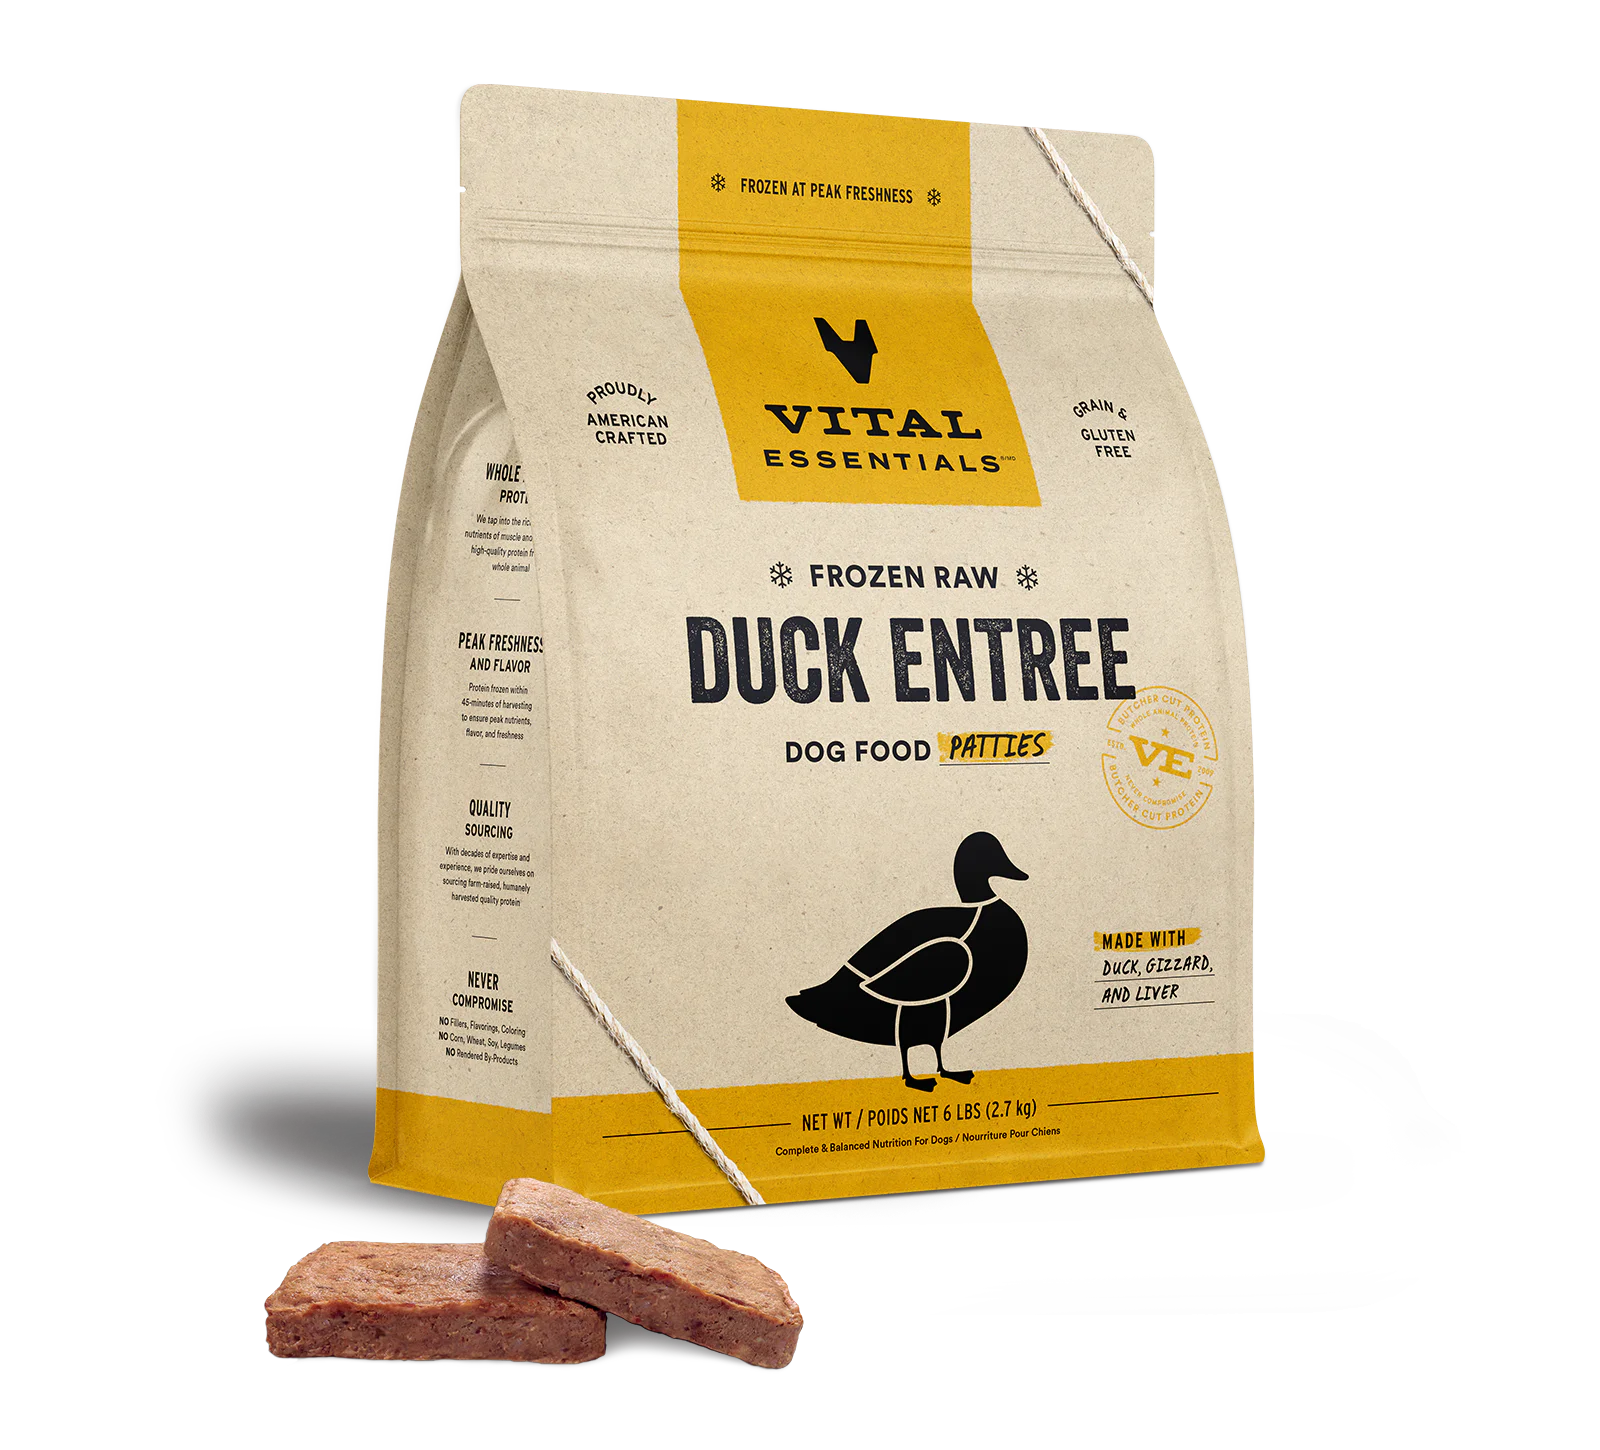 Vital Essentials (VE) - Frozen Raw - Duck Entree Patties (For Dogs) - Frozen Product